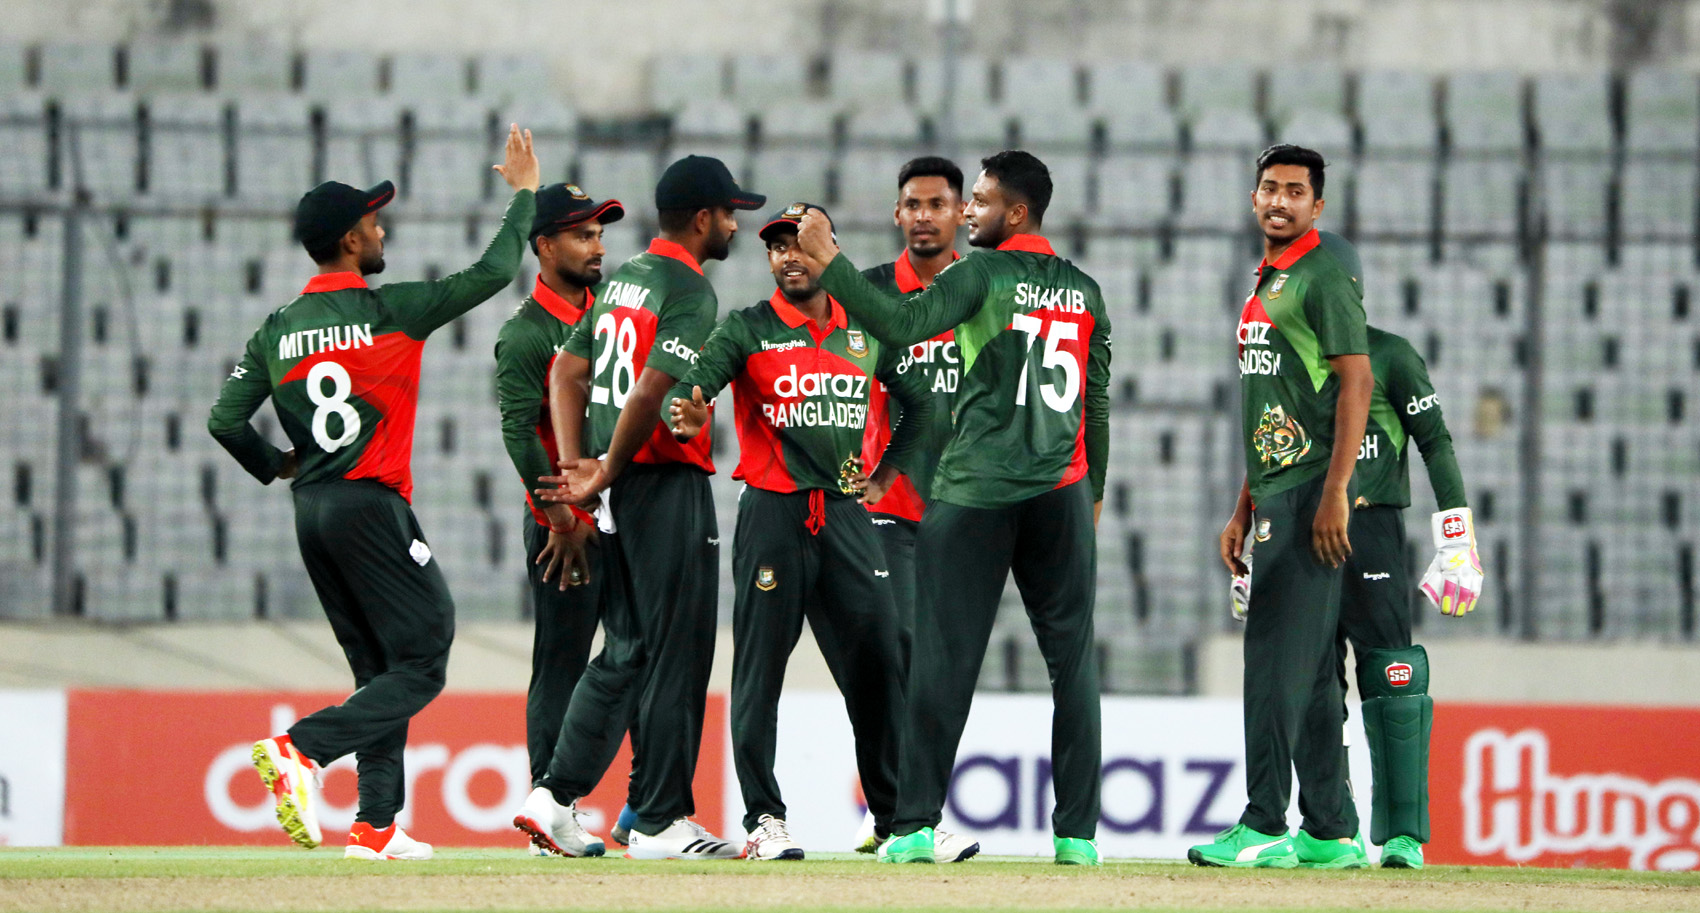 Bangladesh defeat Sri Lanka by 33 runs in first ODI, Hasaranga’s 74 too late